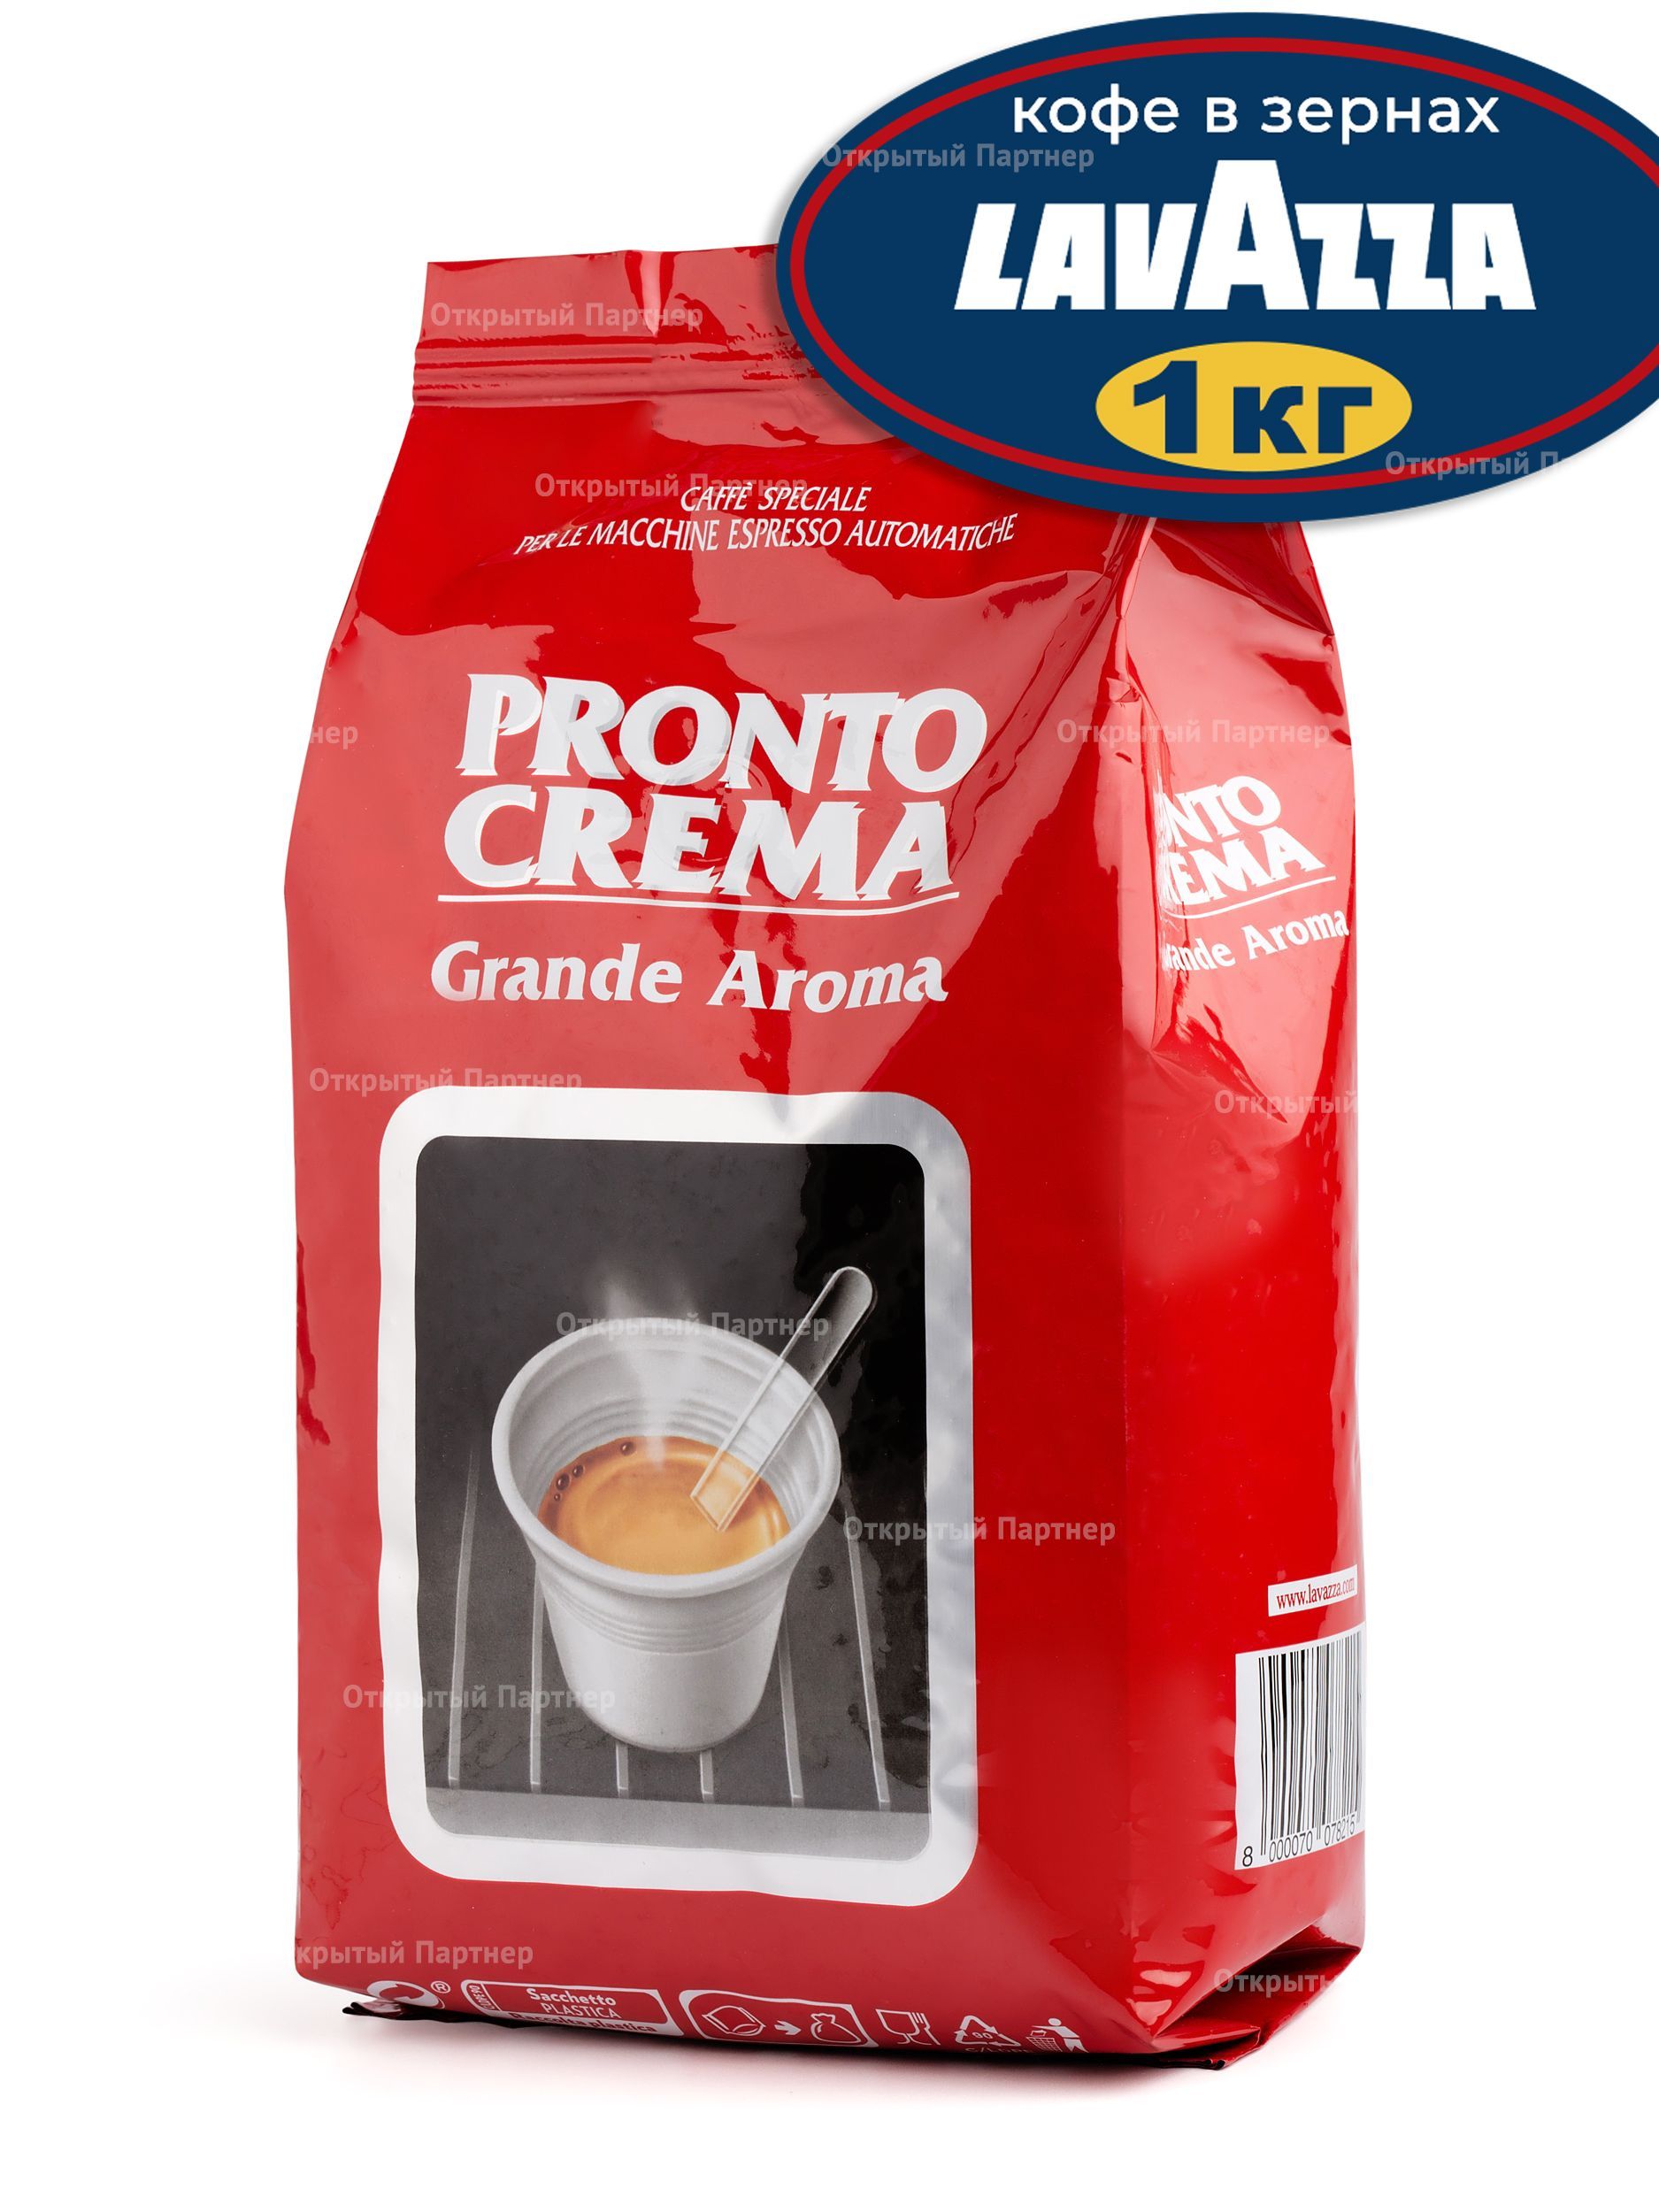 Кофе в зернах 1 кг lavazza crema. Лавацца Пронто крема 1 кг. Кофе в зернах crema. Кофе Aroma. Pronto crema фото.